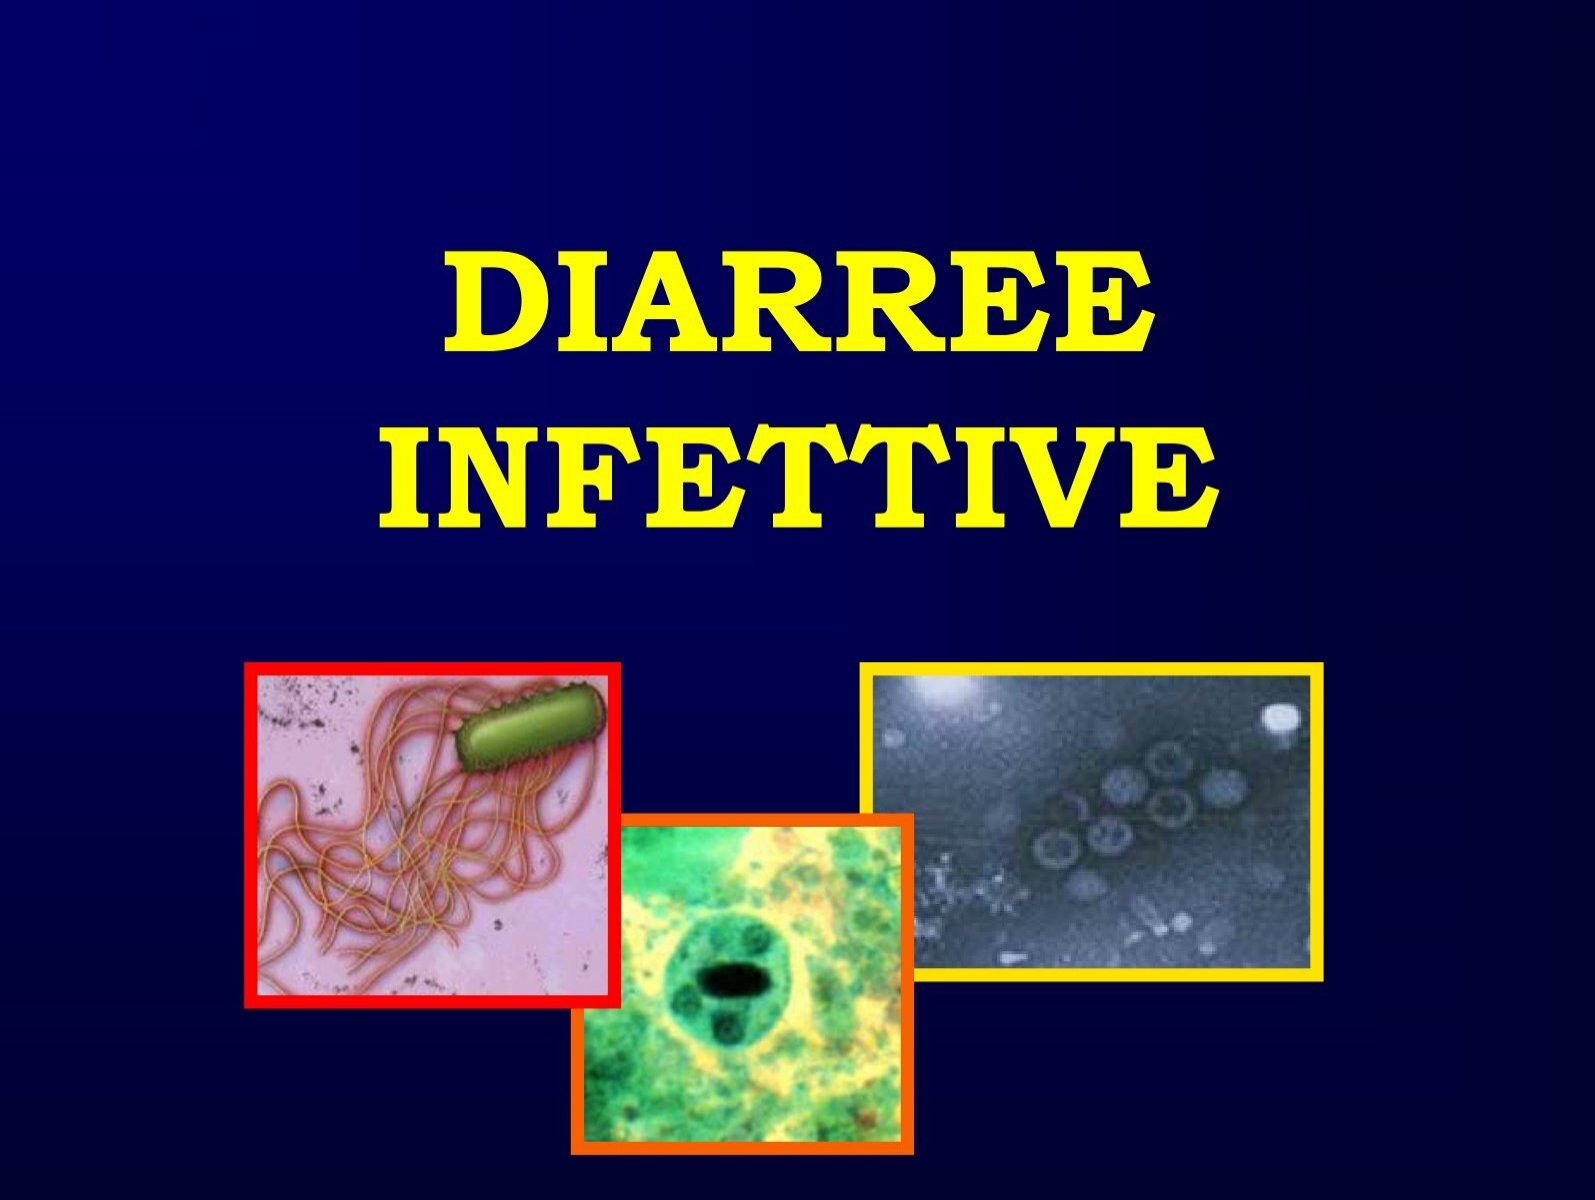 Diarree infettive